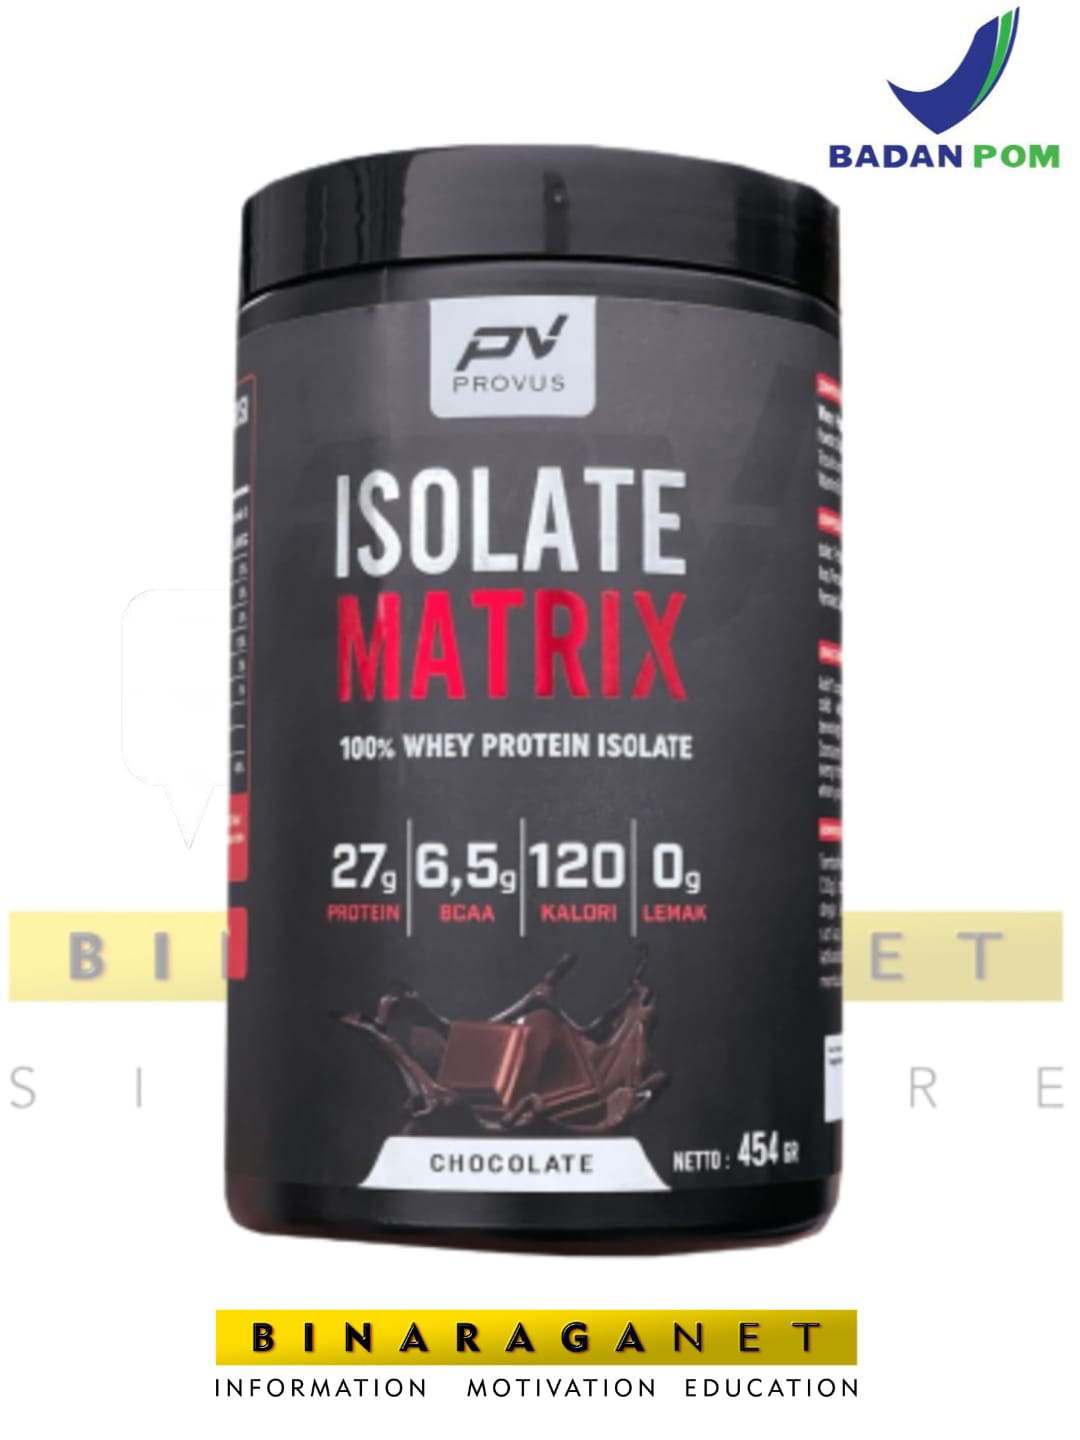 Provus Isolate Matrix (100% Whey Protein Isolate) - 1lb